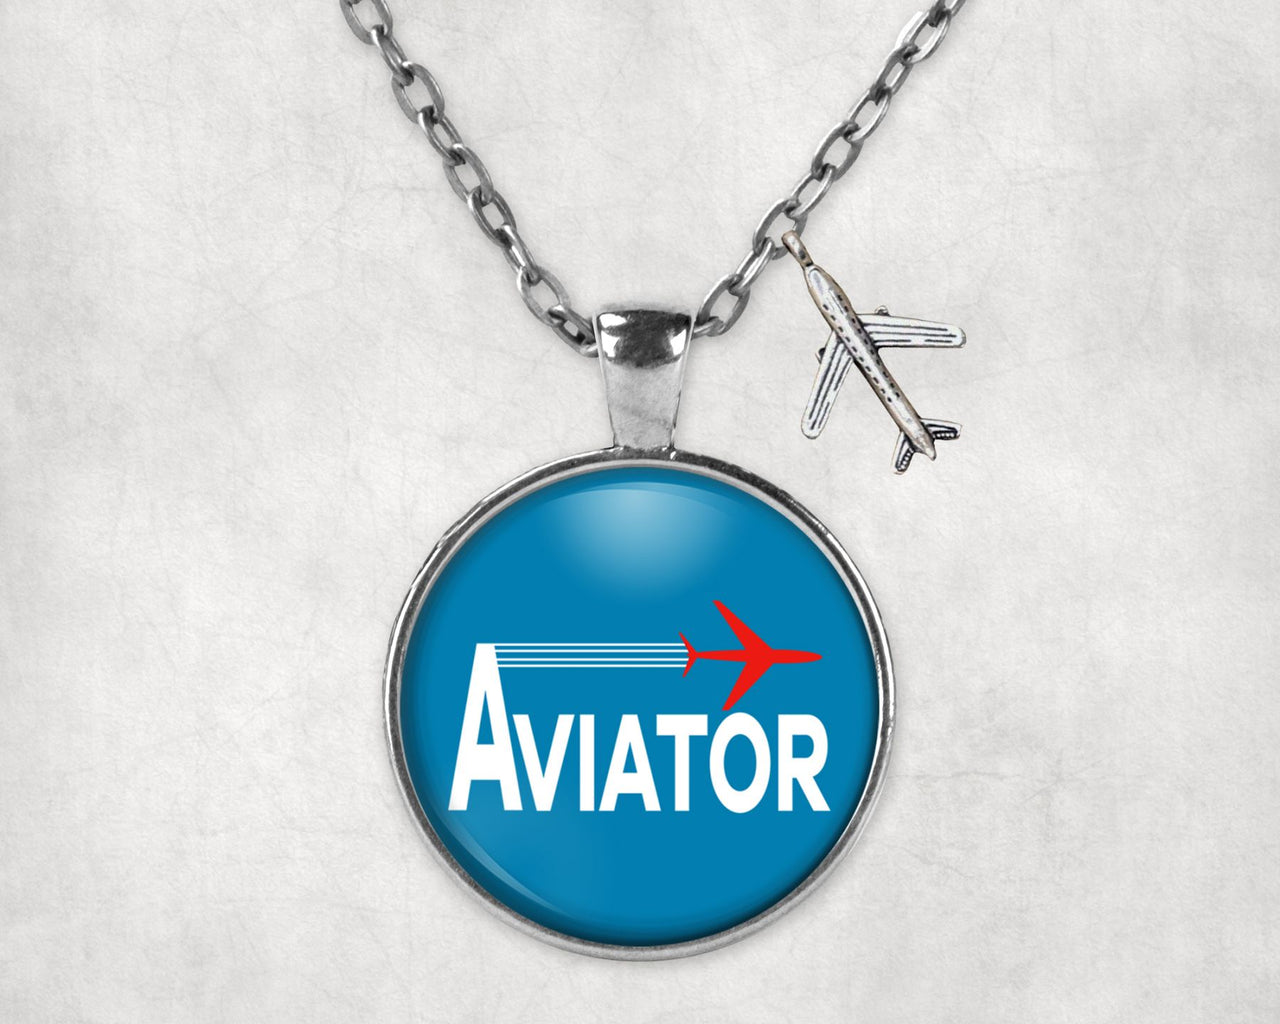 Aviator Designed Necklaces